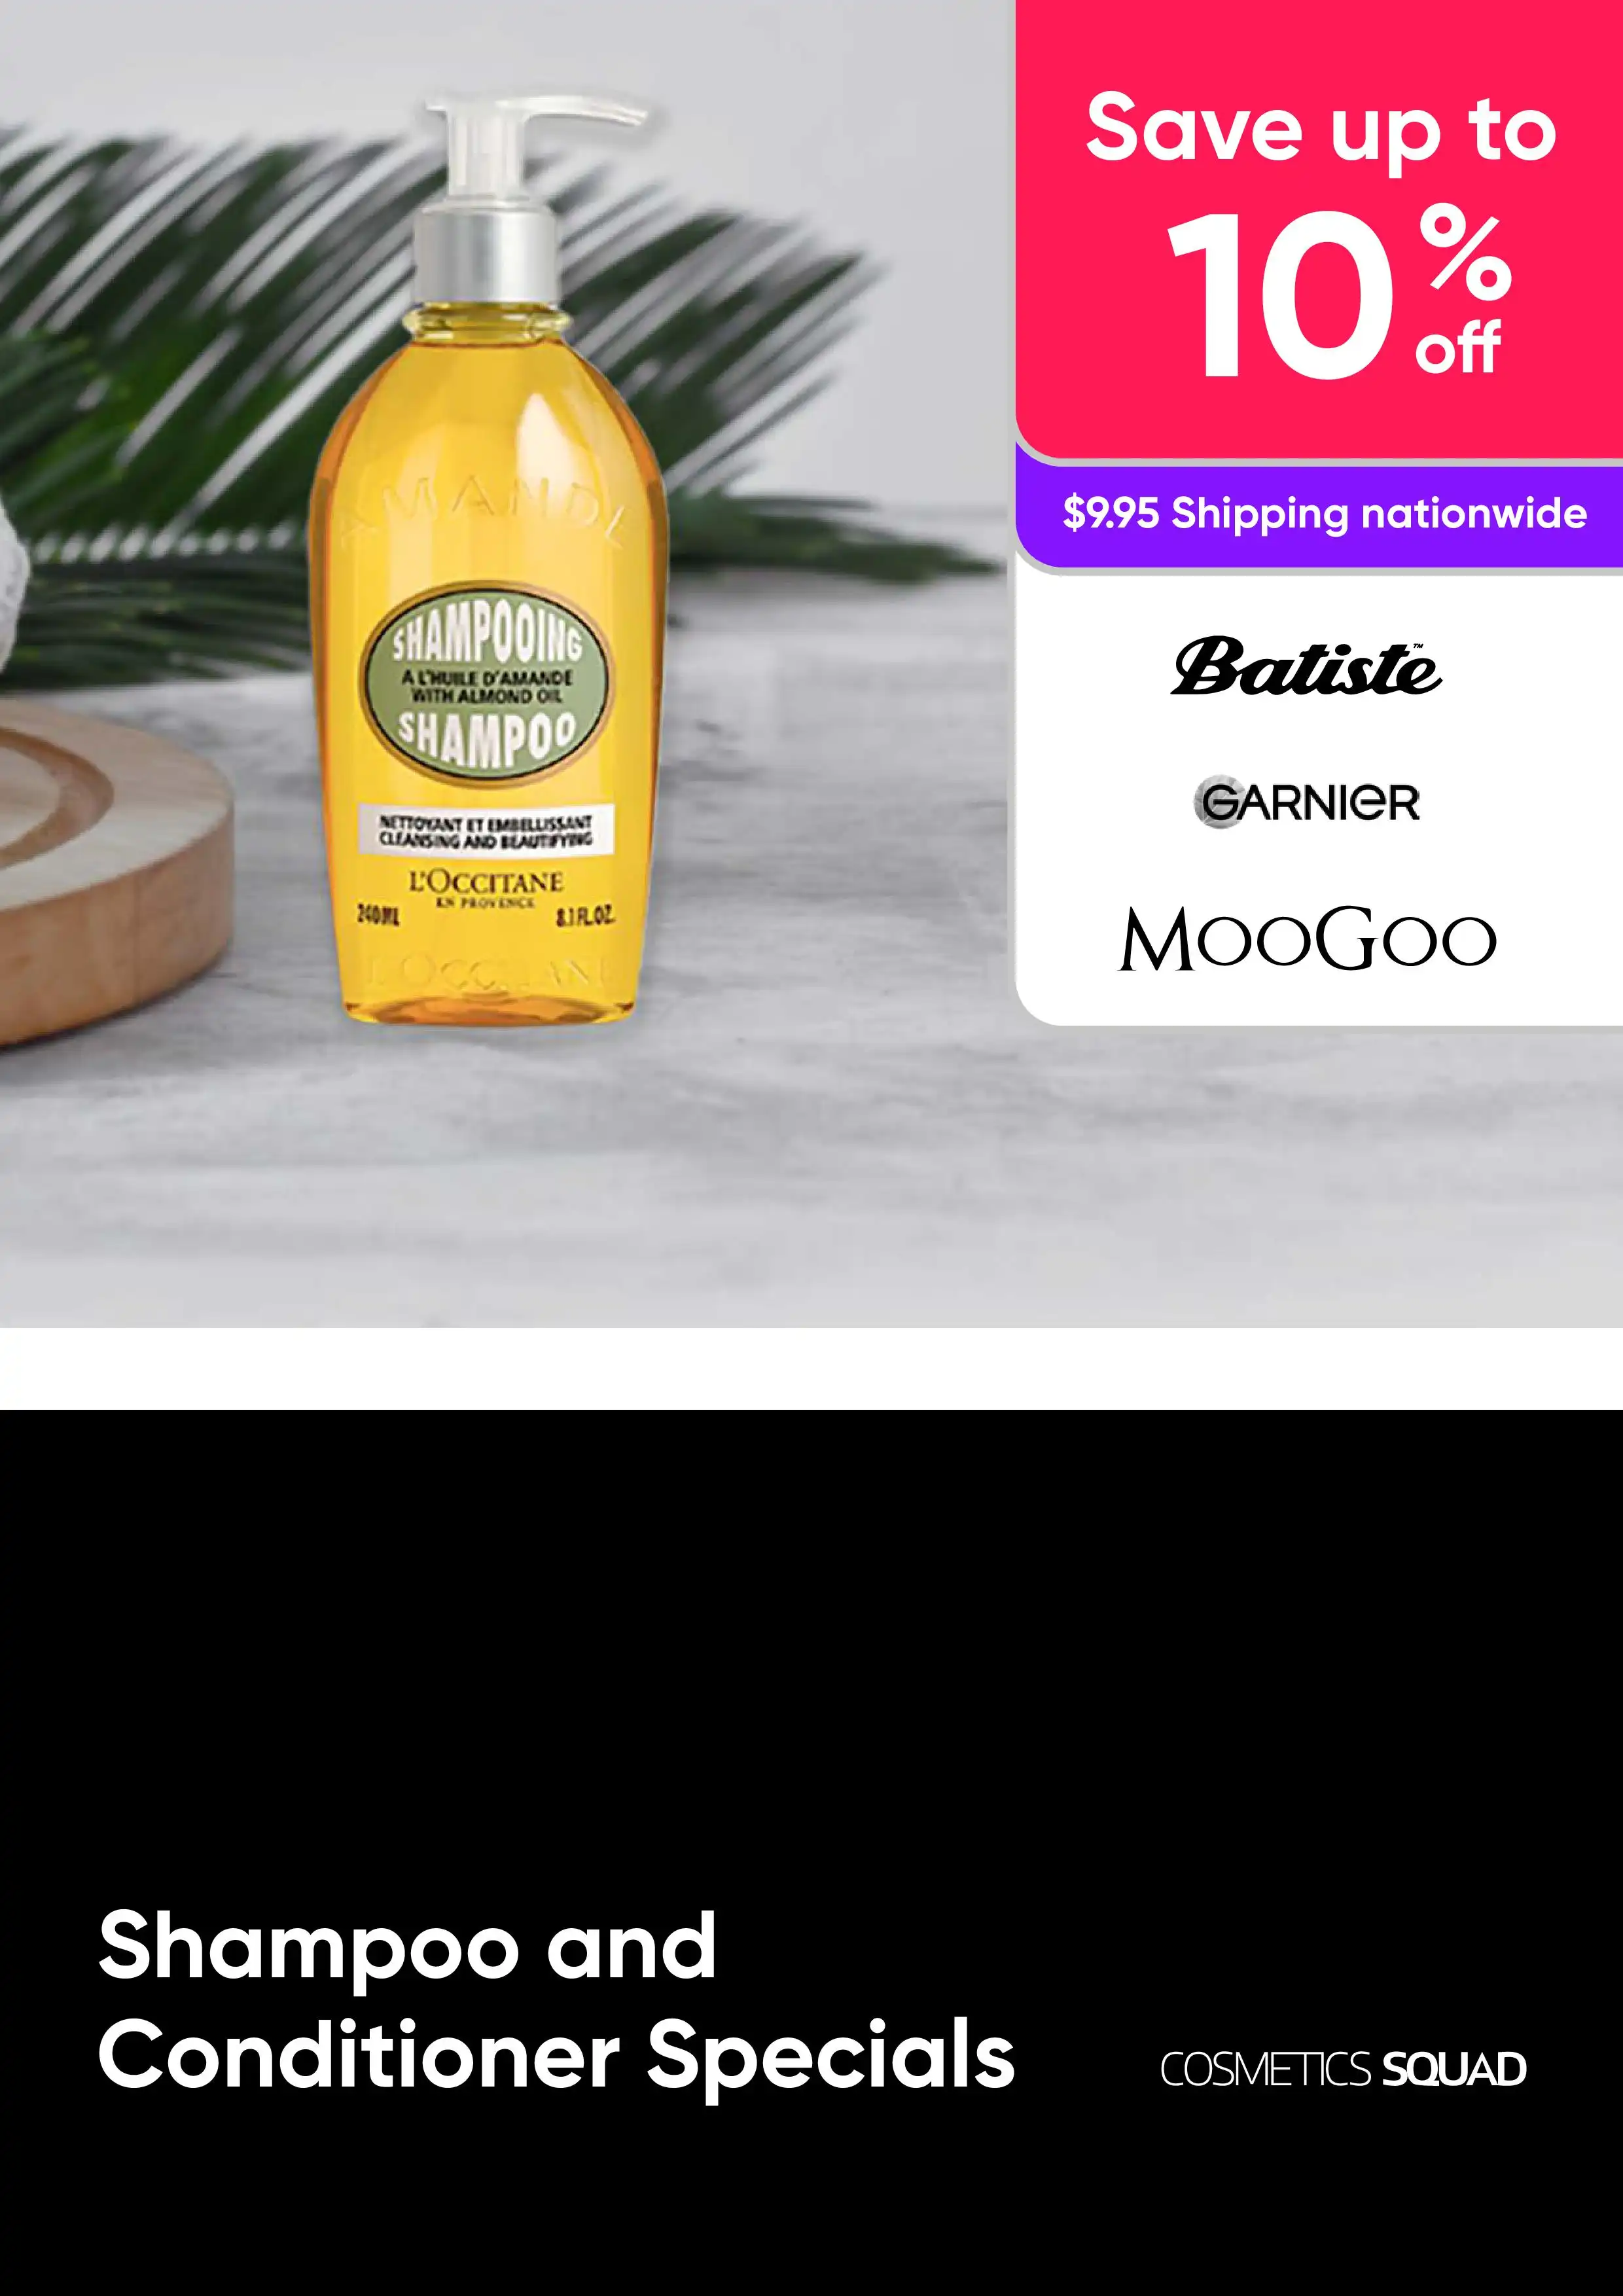 Shampoo and Conditioner Sale - Batiste, Garnier, MOOGOO - Deals from $10